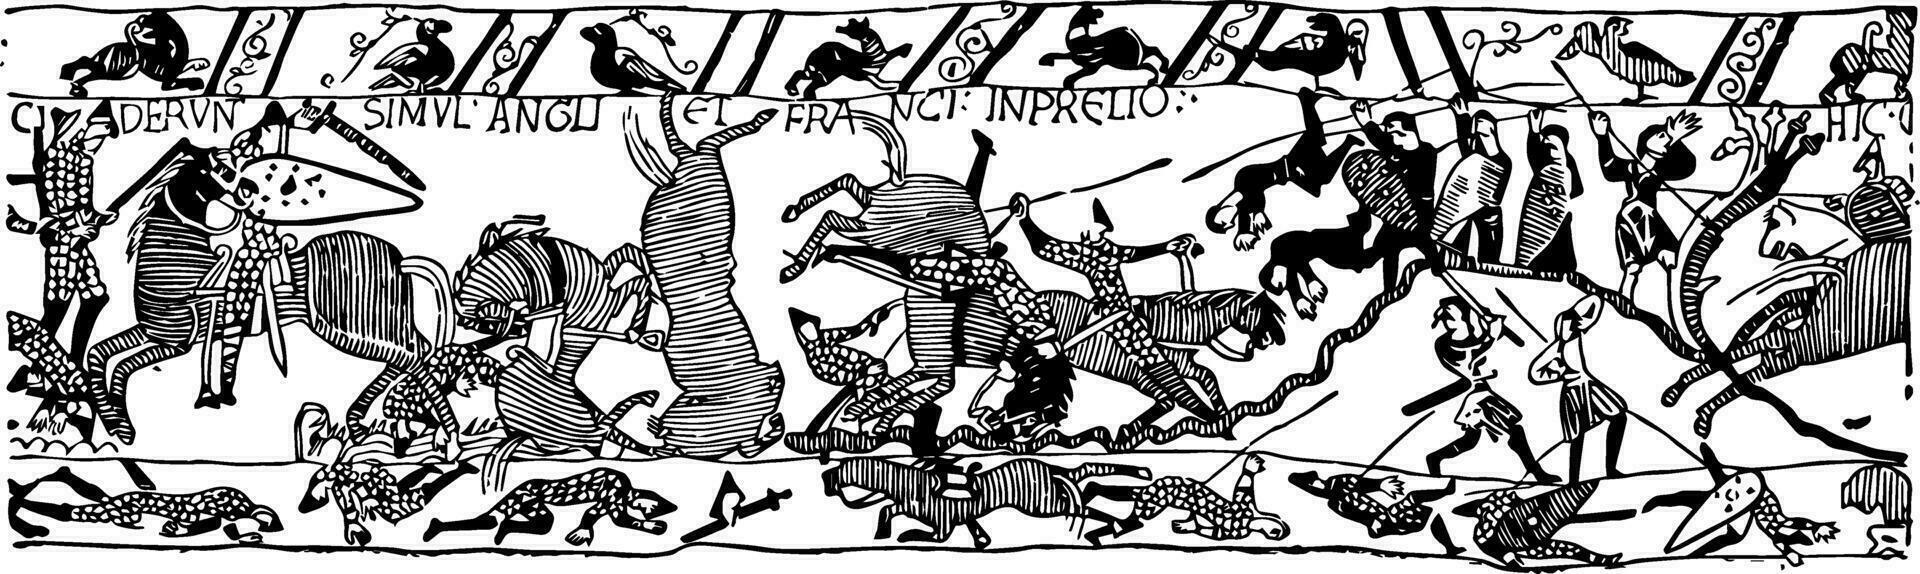 Battle of Hastings vintage illustration. vector